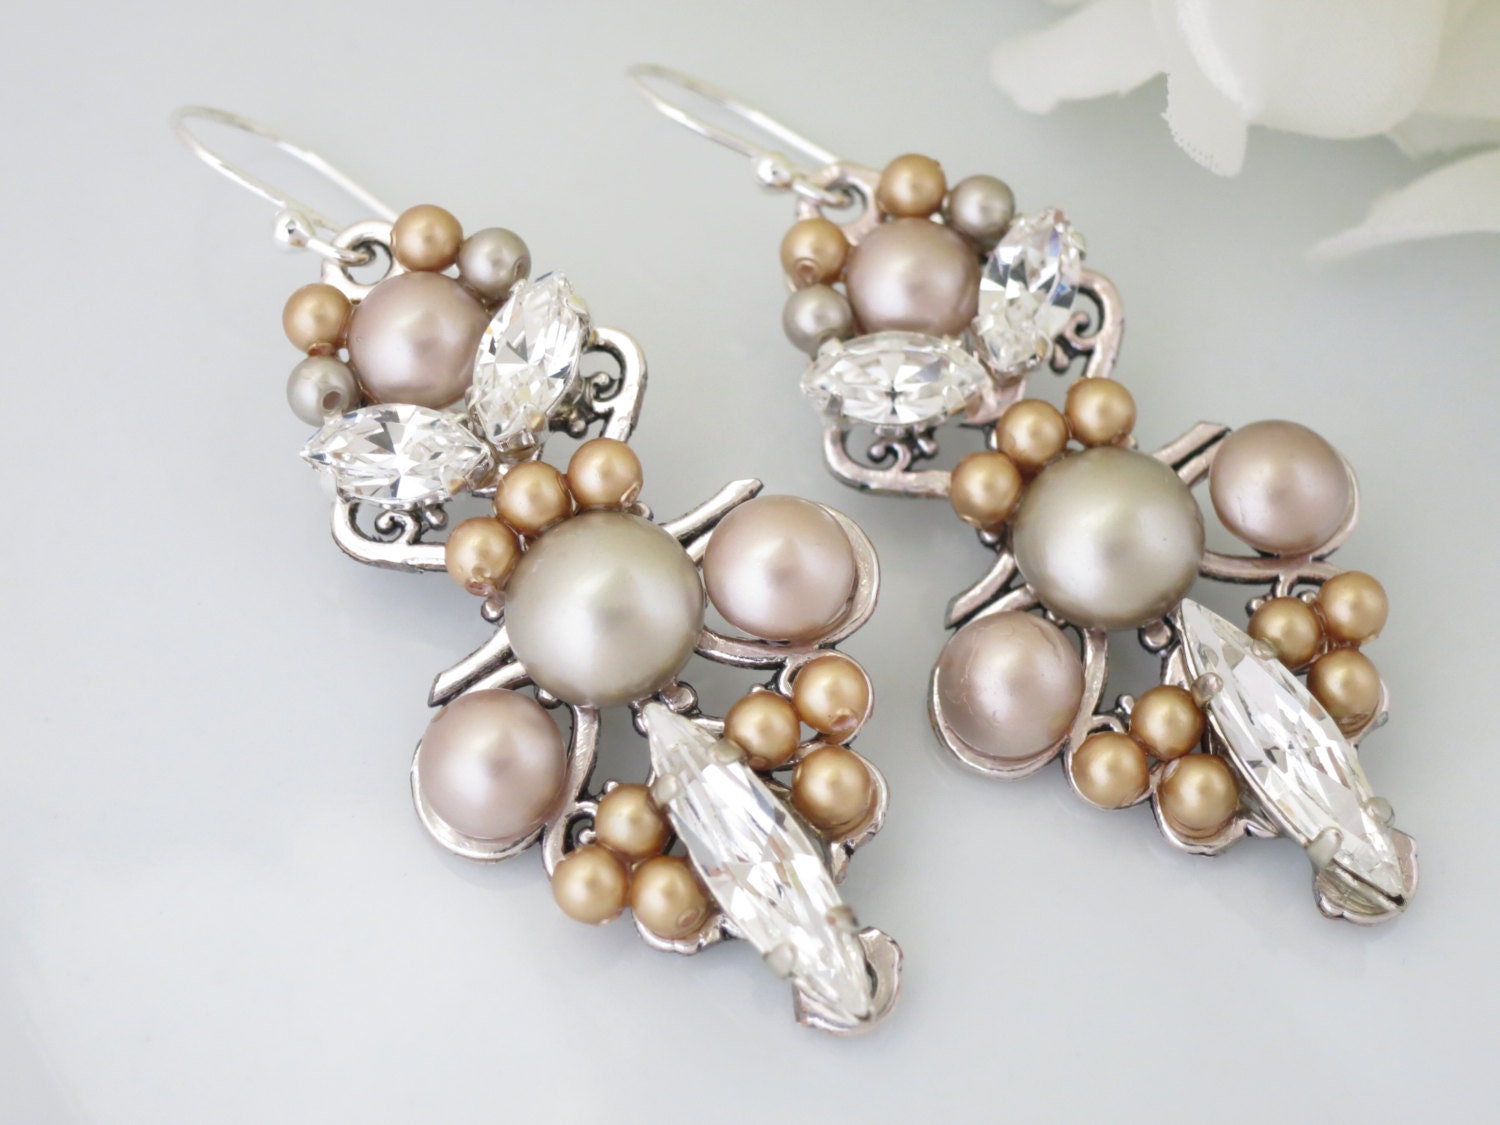 Swarovski crystal and pearl chandelier earring, Taupe bridal earring, Rhinestone and pearl wedding earring